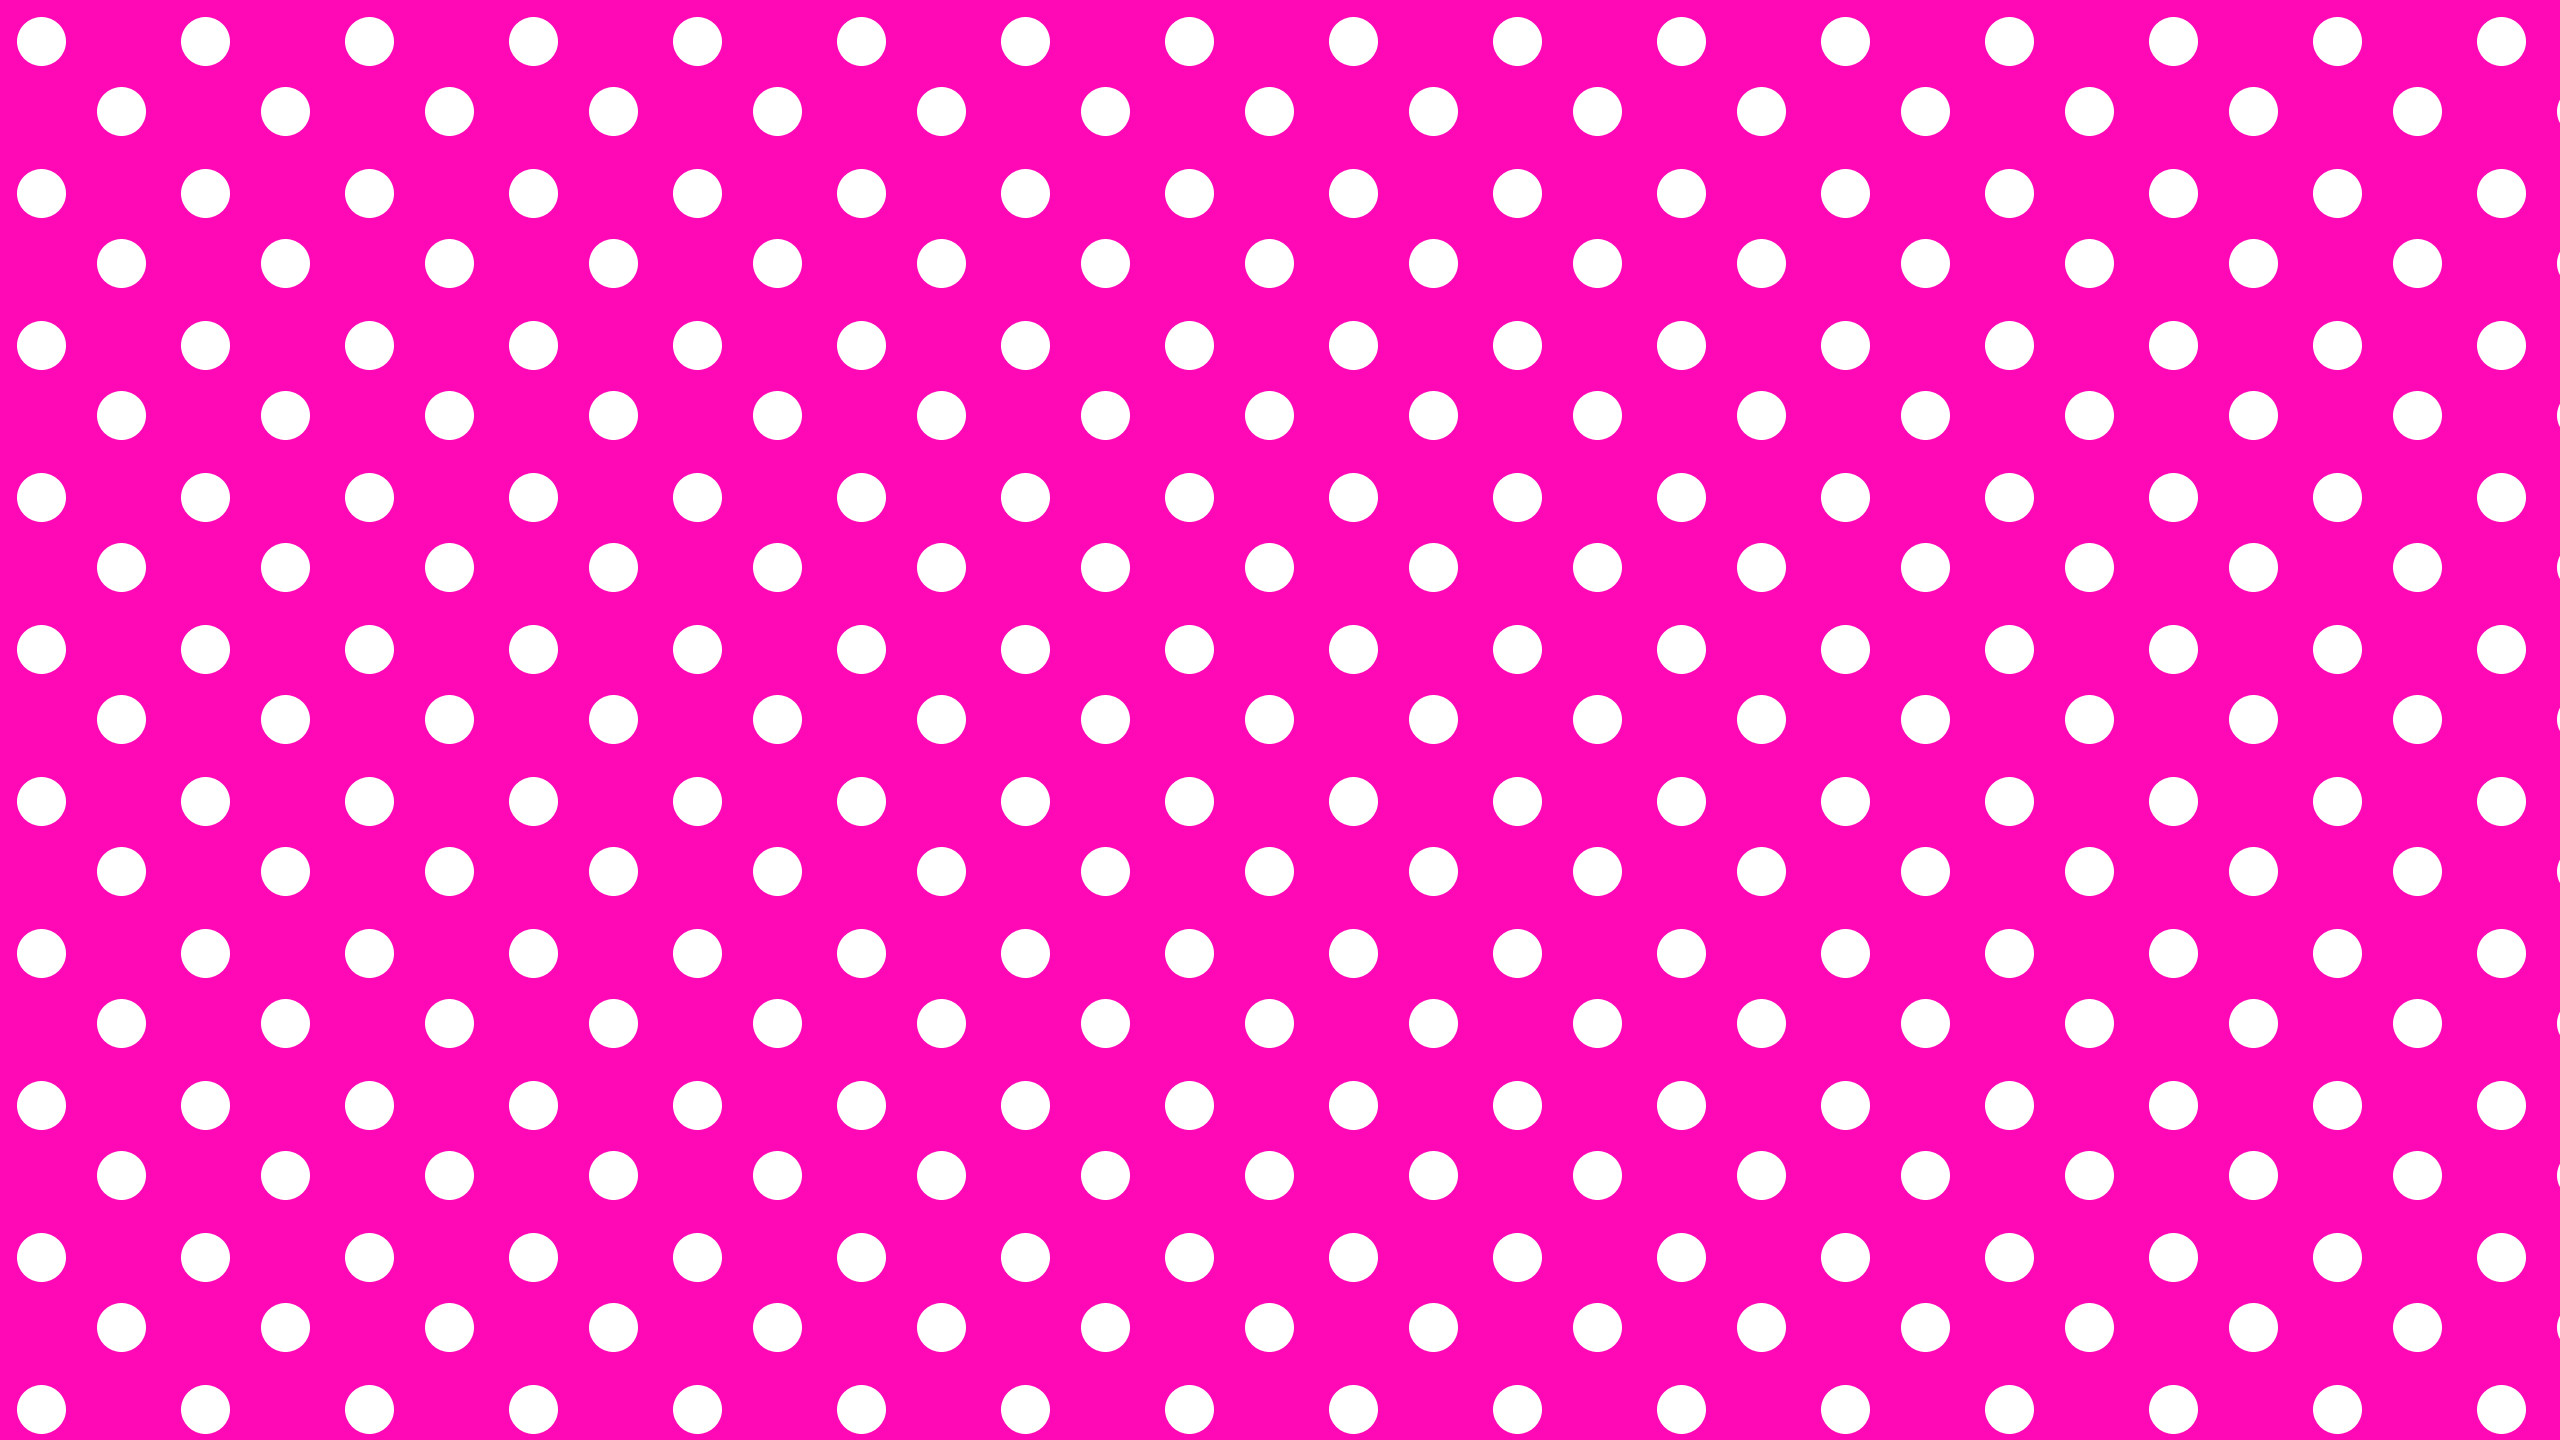 Pink Polka Dot Wallpaper Data Src Background Minnie Mouse Polka Dots Pink 2560x1440